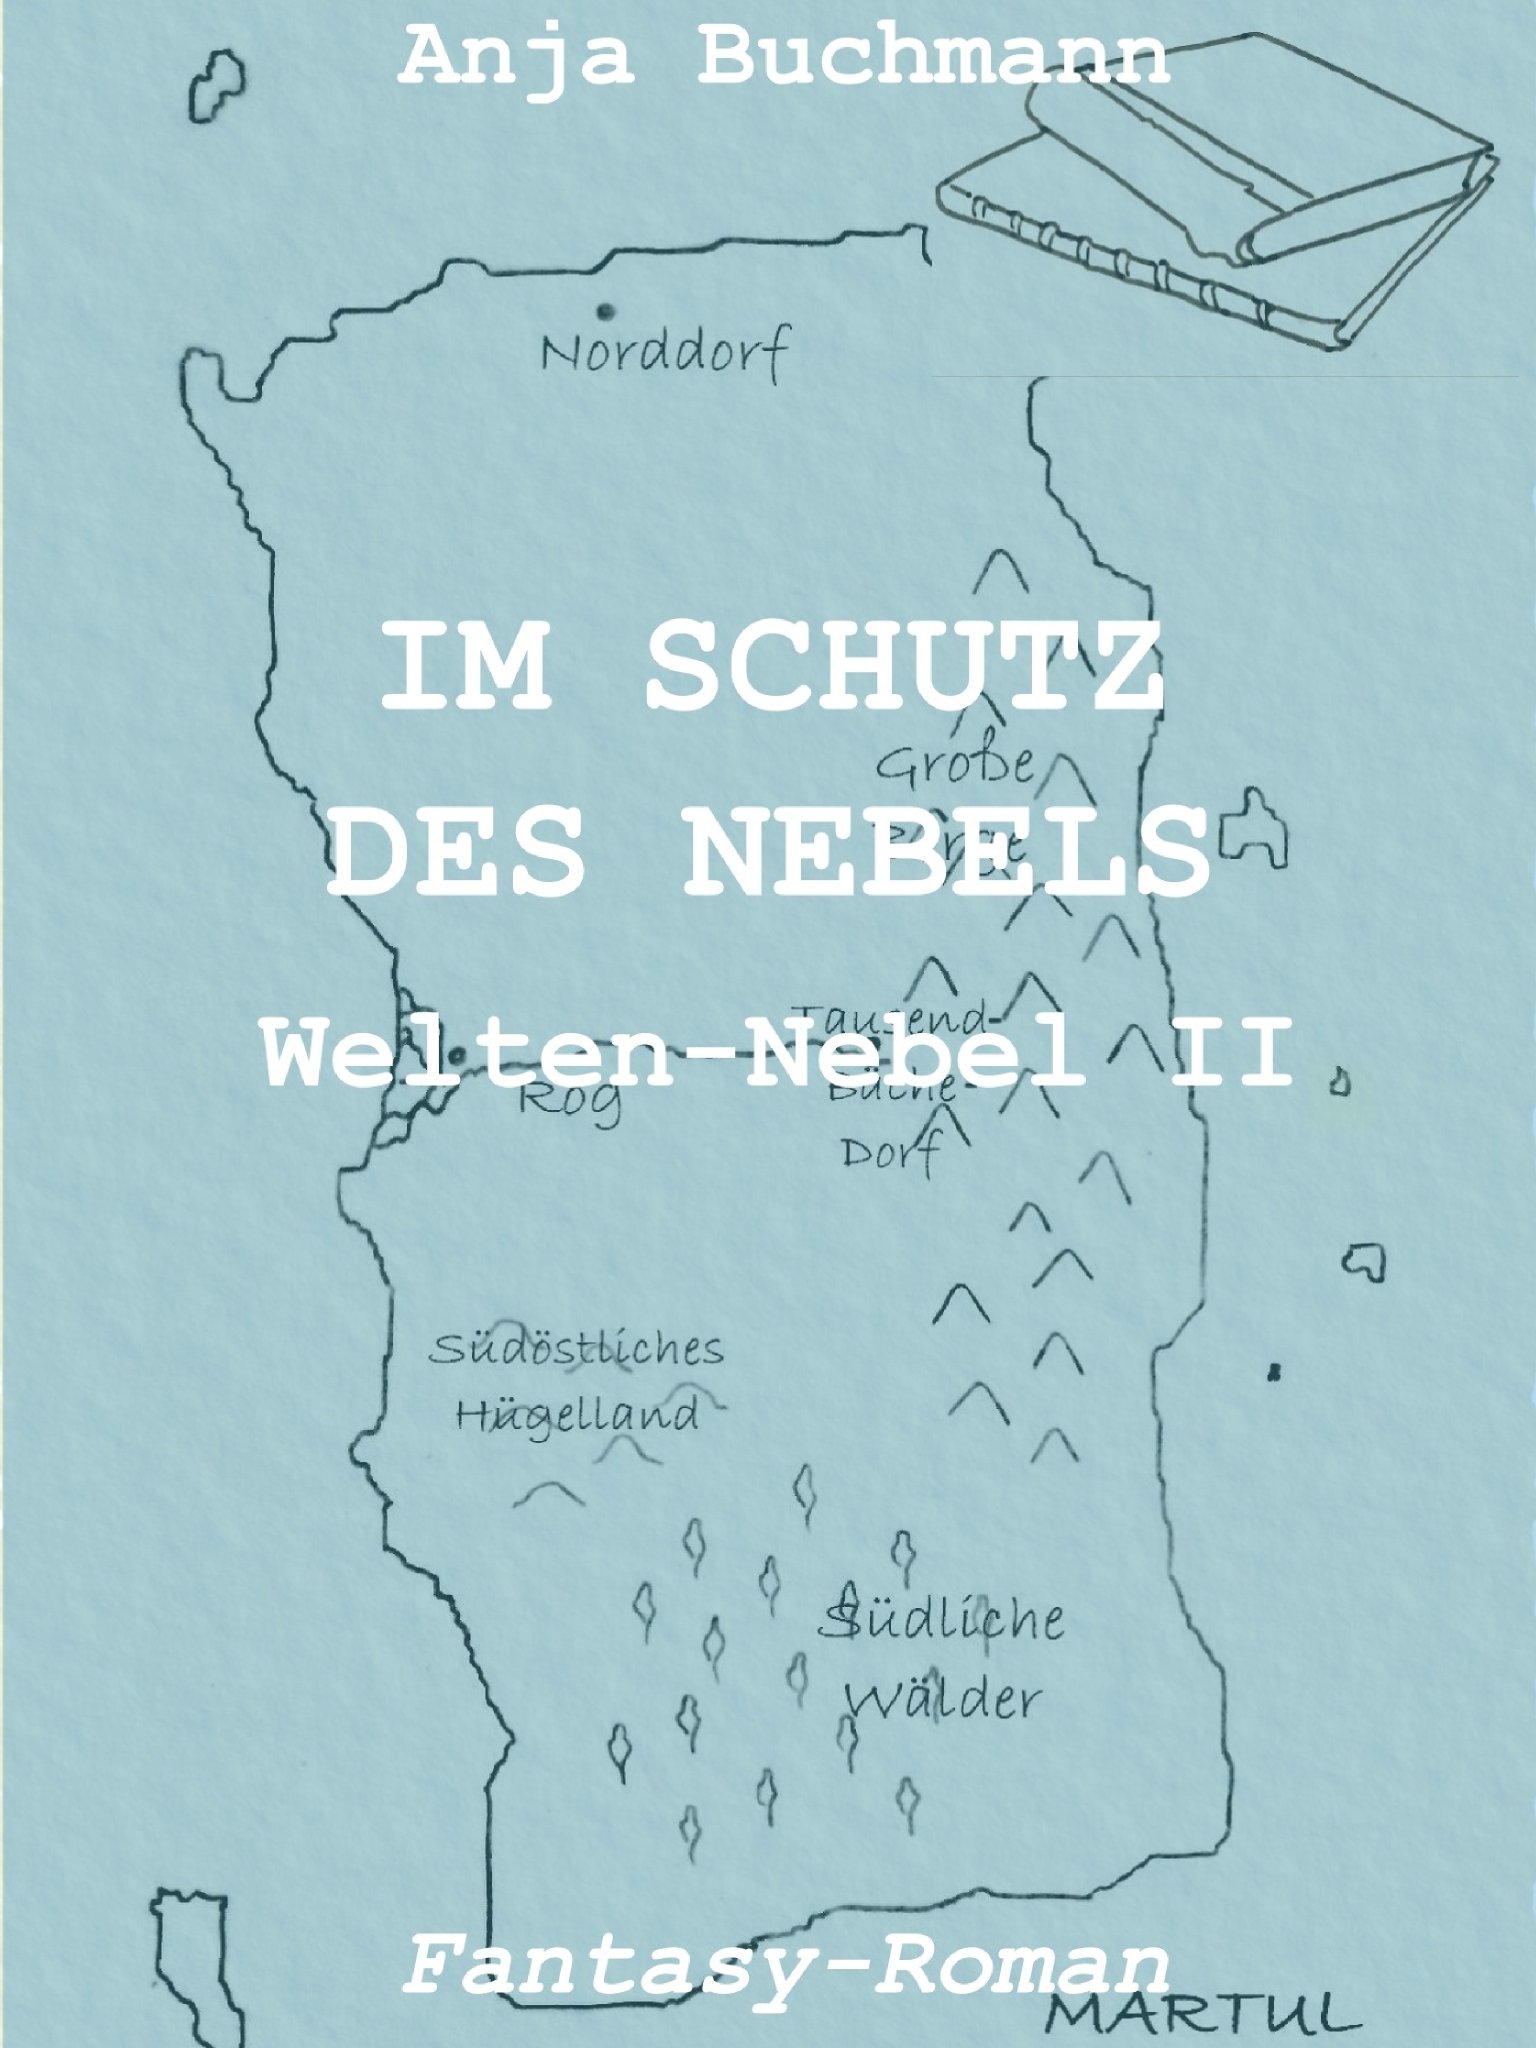 Im Schutz des Nebels, Cover,  Genre: Fantasy, Roman, Cover,Welten-Nebel II, Tetralogie, WeltenNebel Band 2